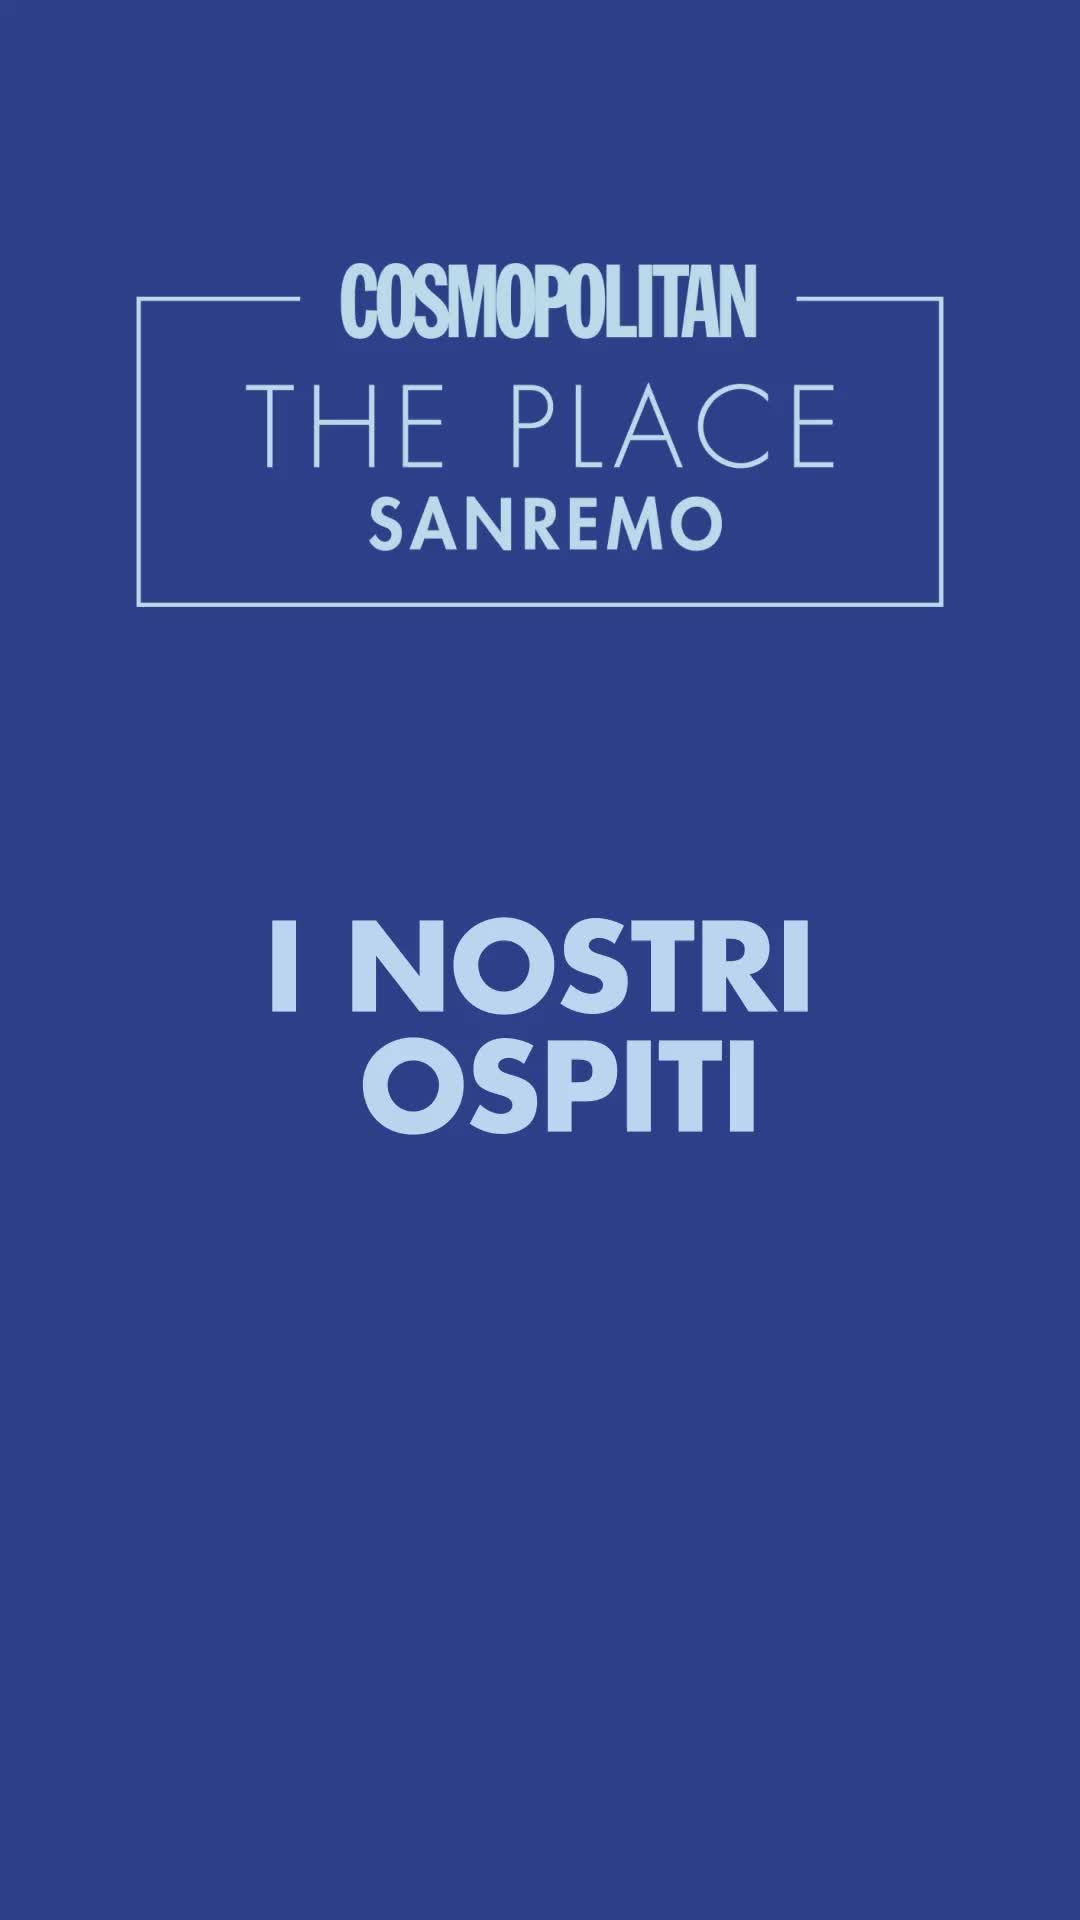 preview for The Place Sanremo - I nostri ospiti